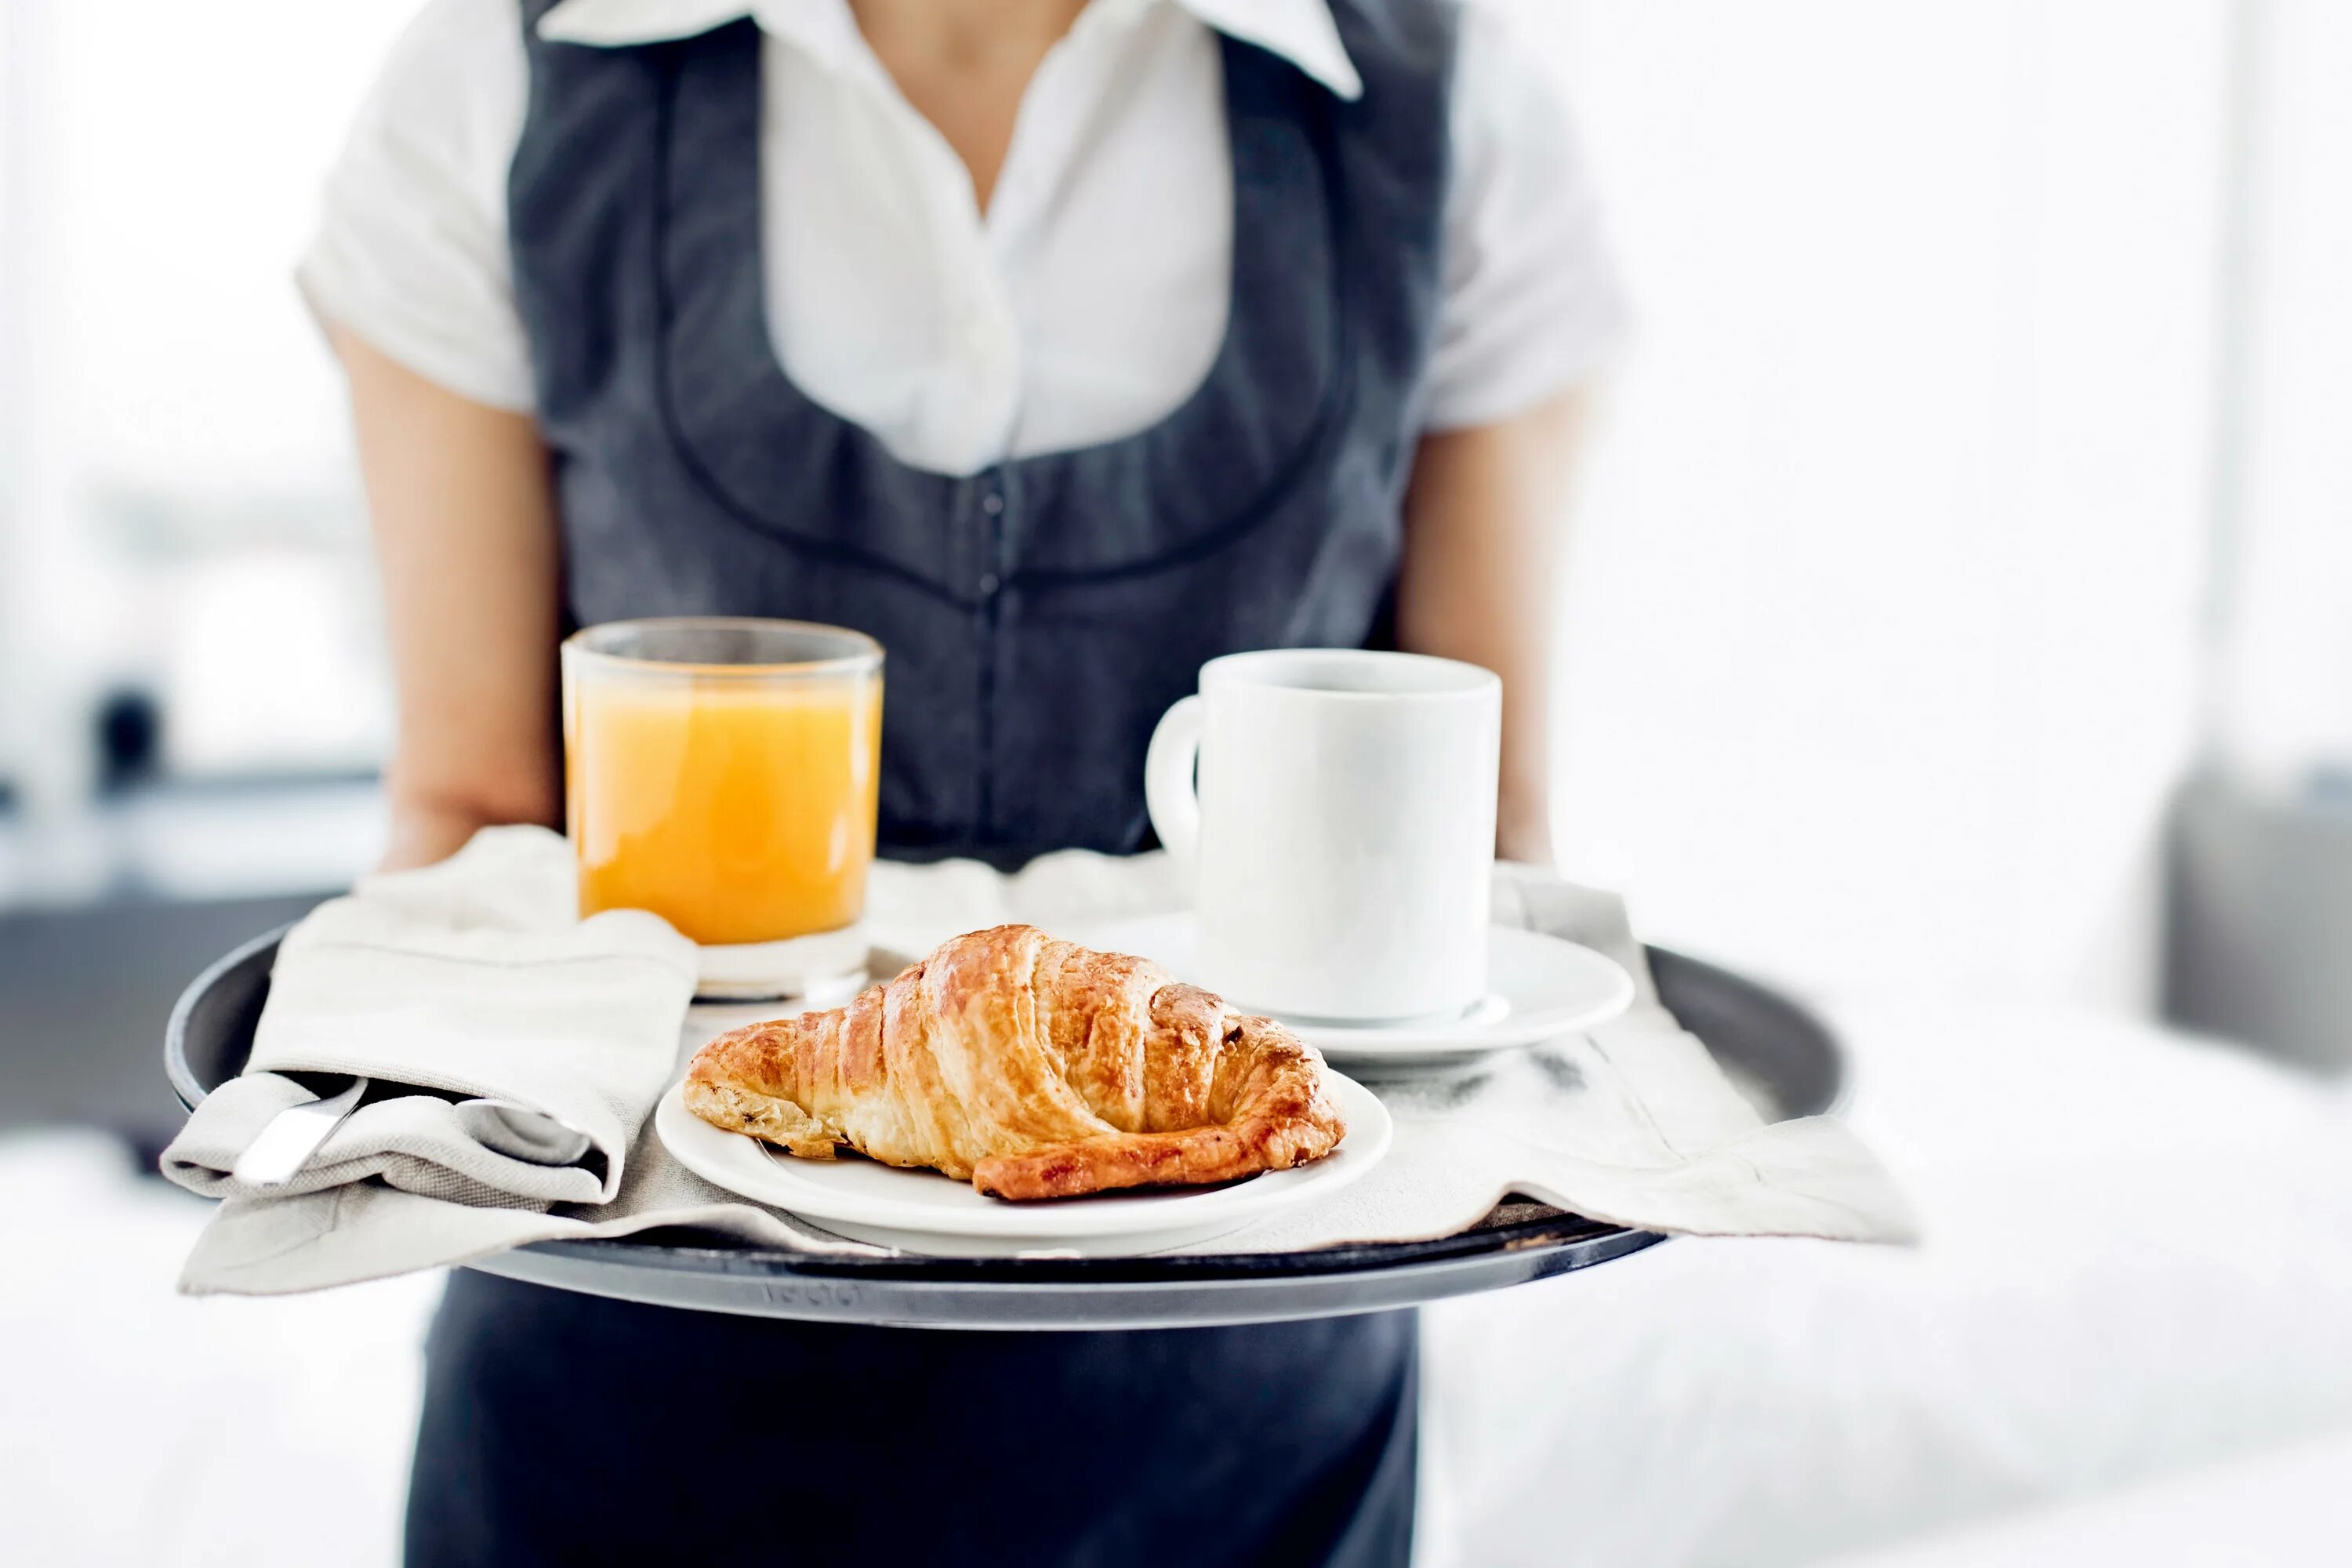 Завтрак в номер. Рум сервис в отеле. Девушка накрывает на стол. Завтрак рум сервис. Качество услуги питания